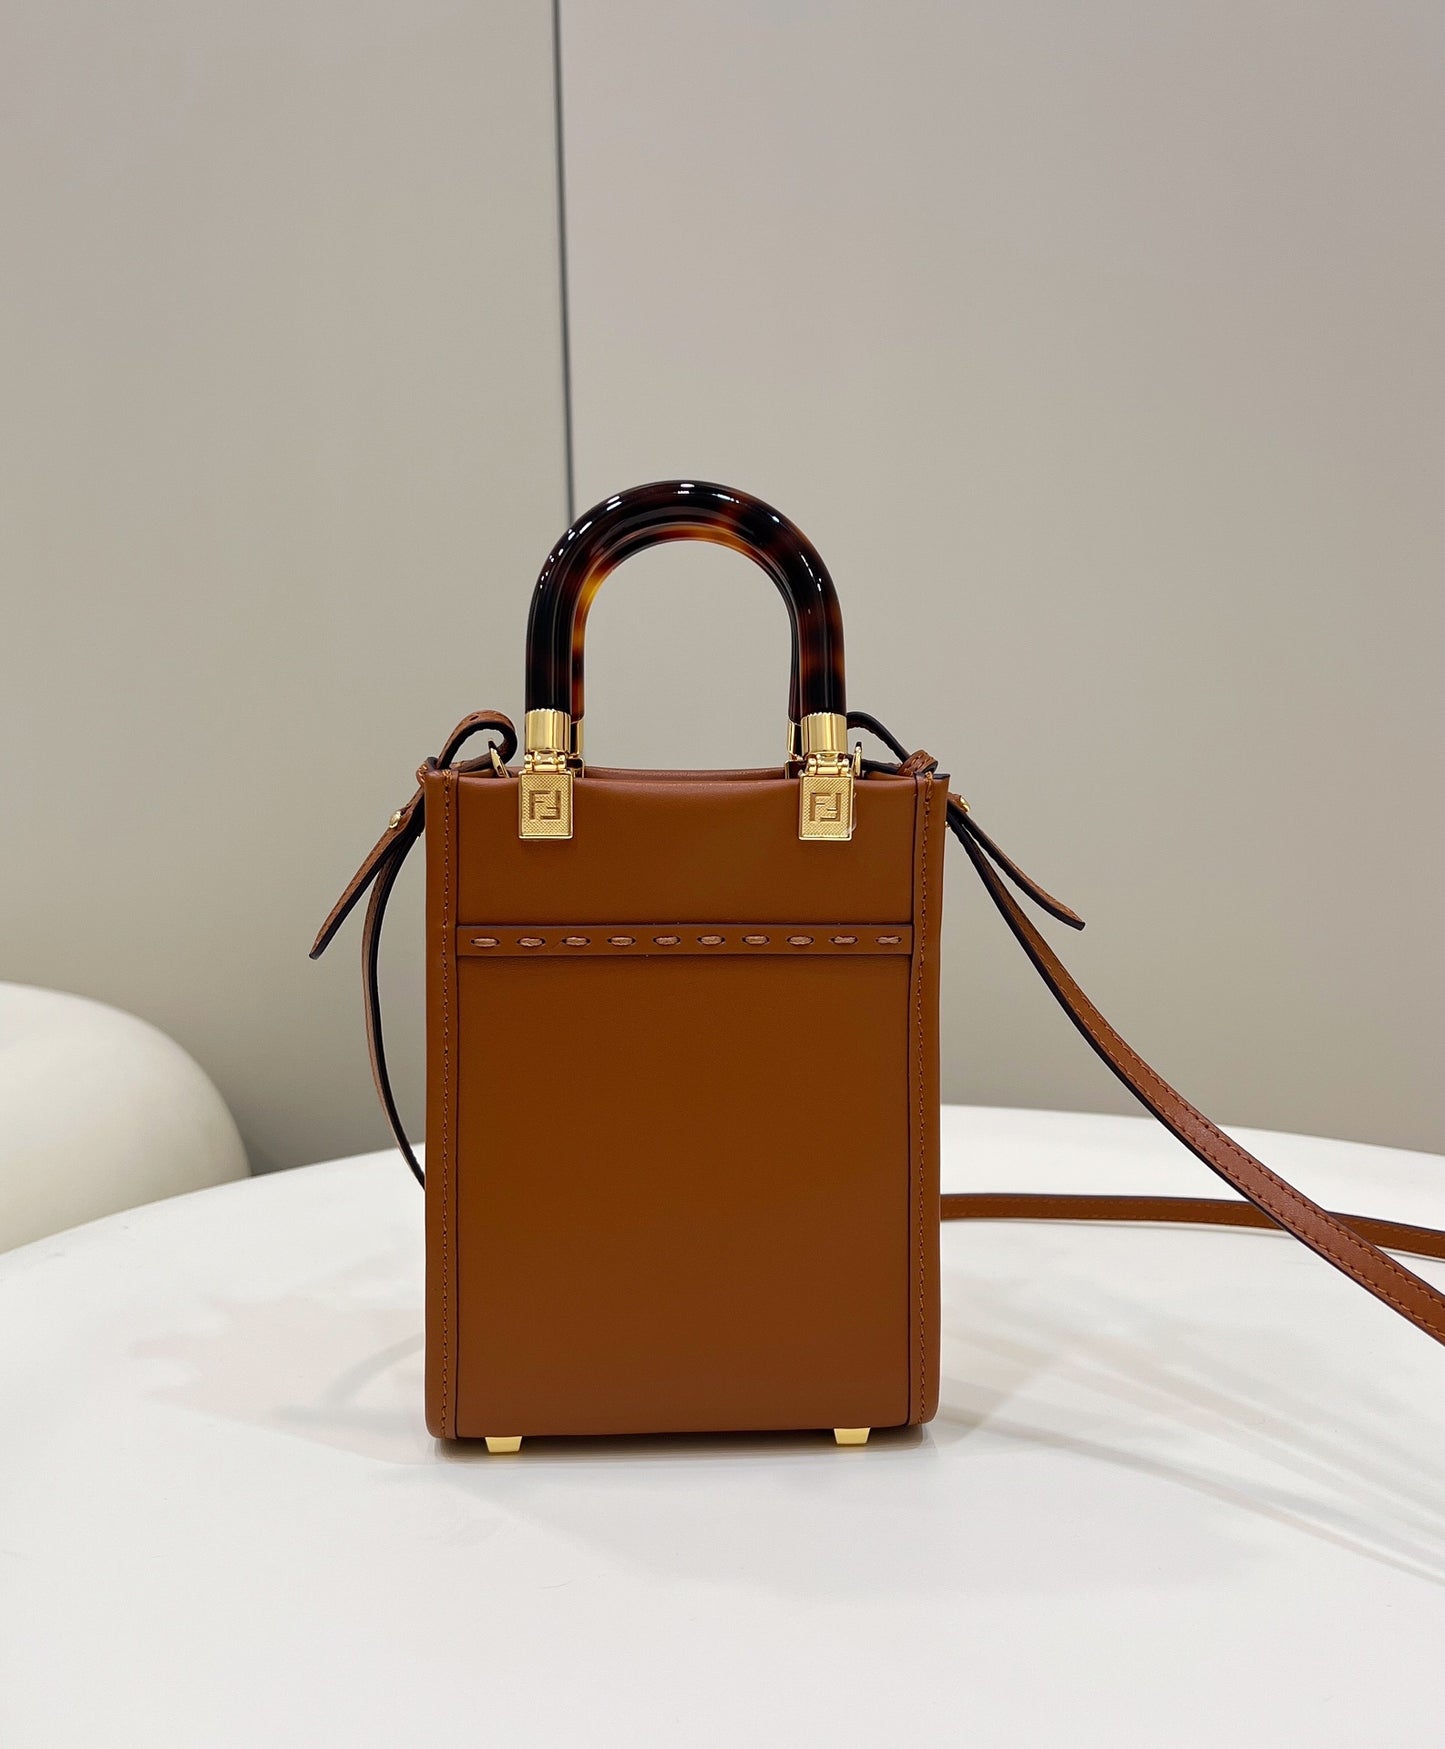 FI Sunshine Shopper Brown Mini Bag For Woman 13cm/5in